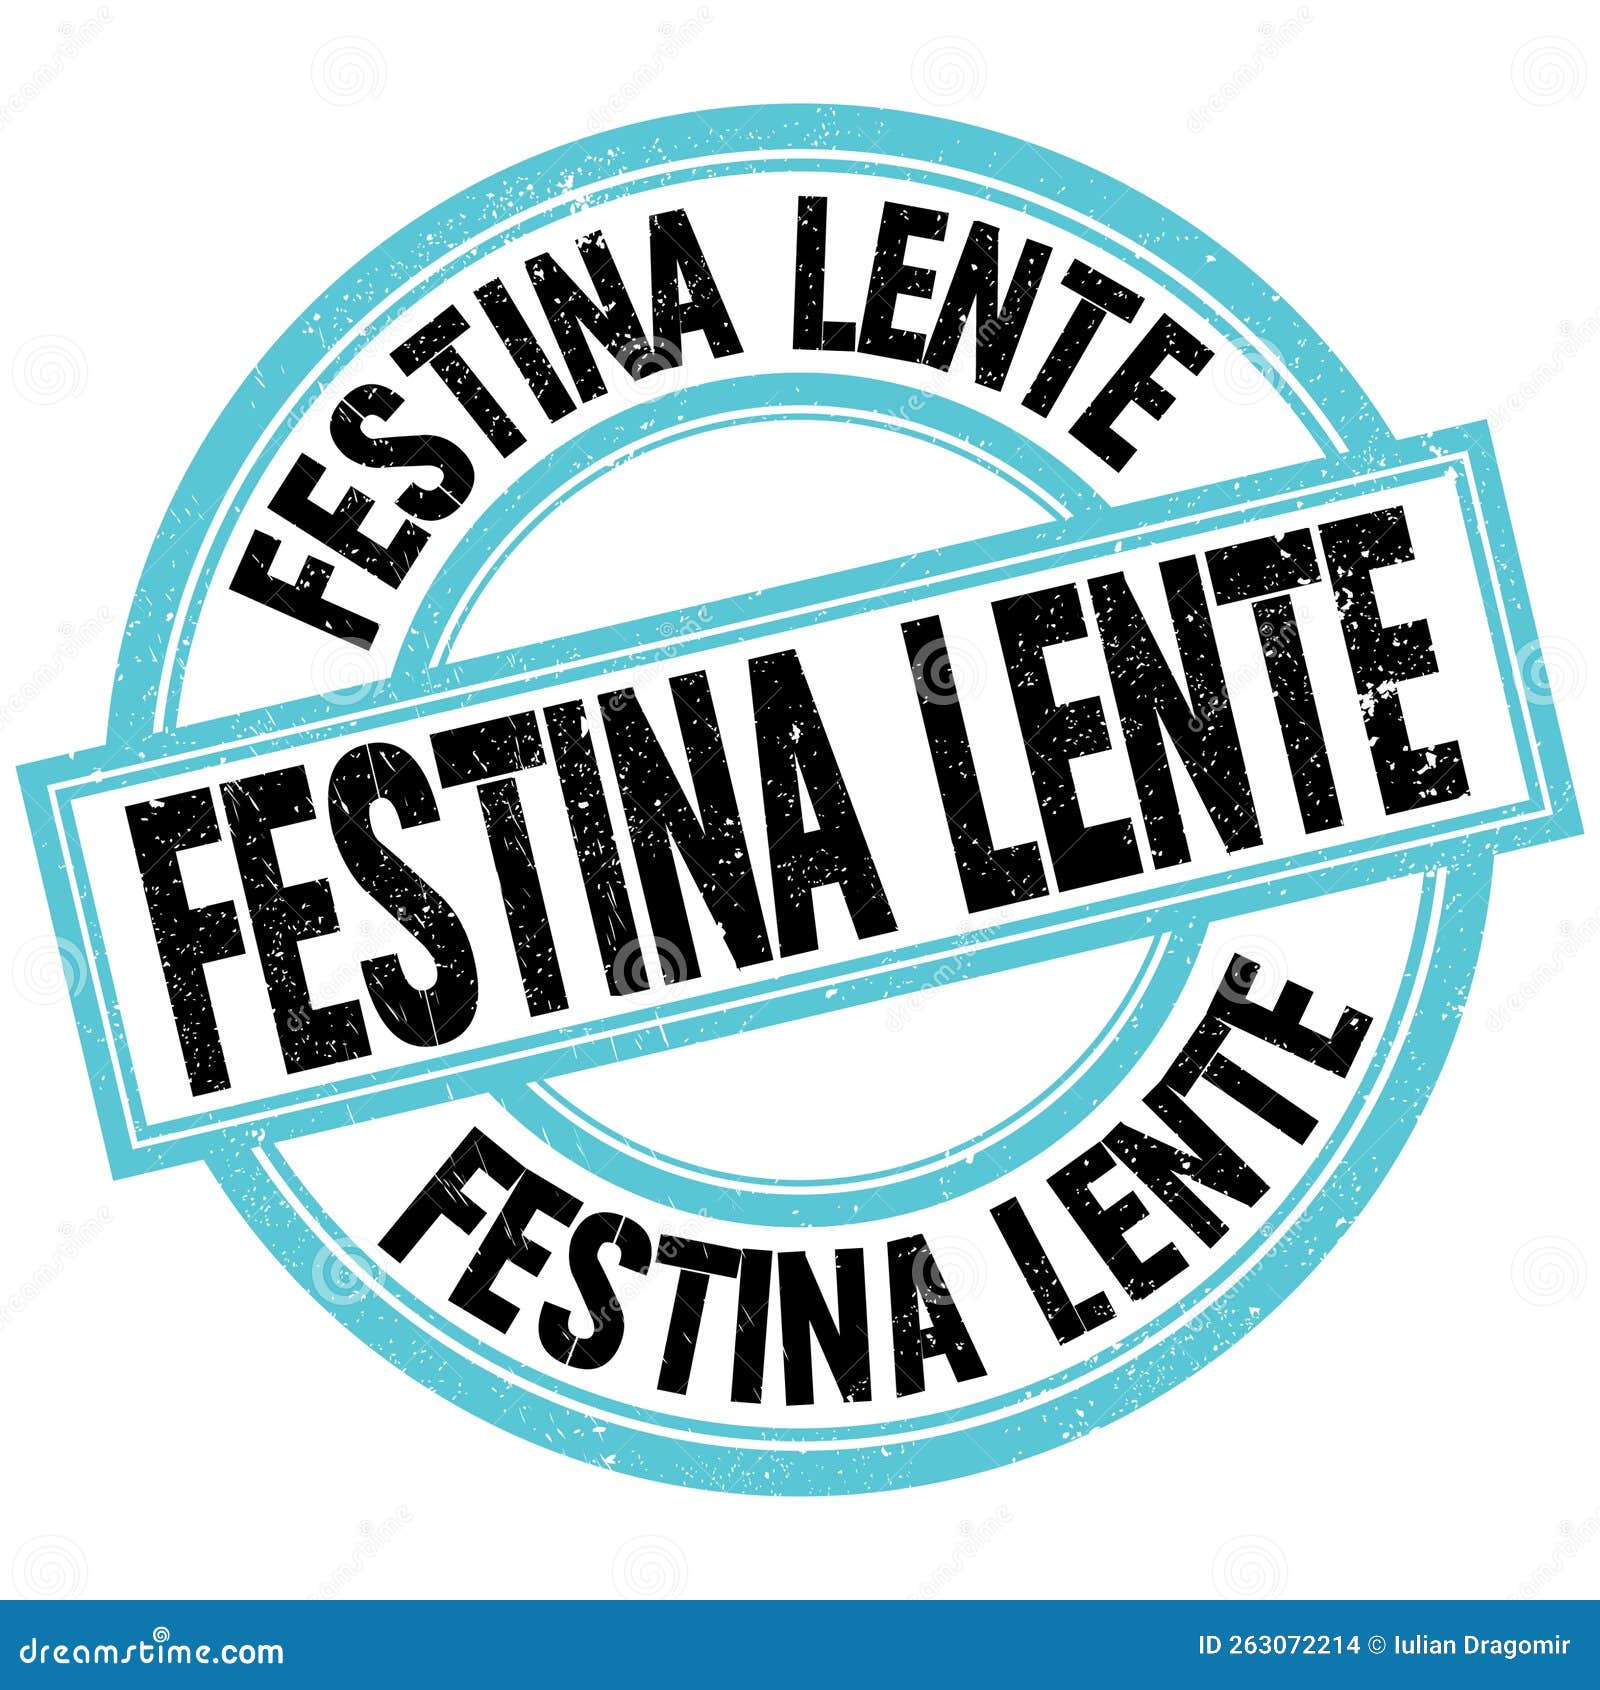 festina lente text on blue-black round stamp sign